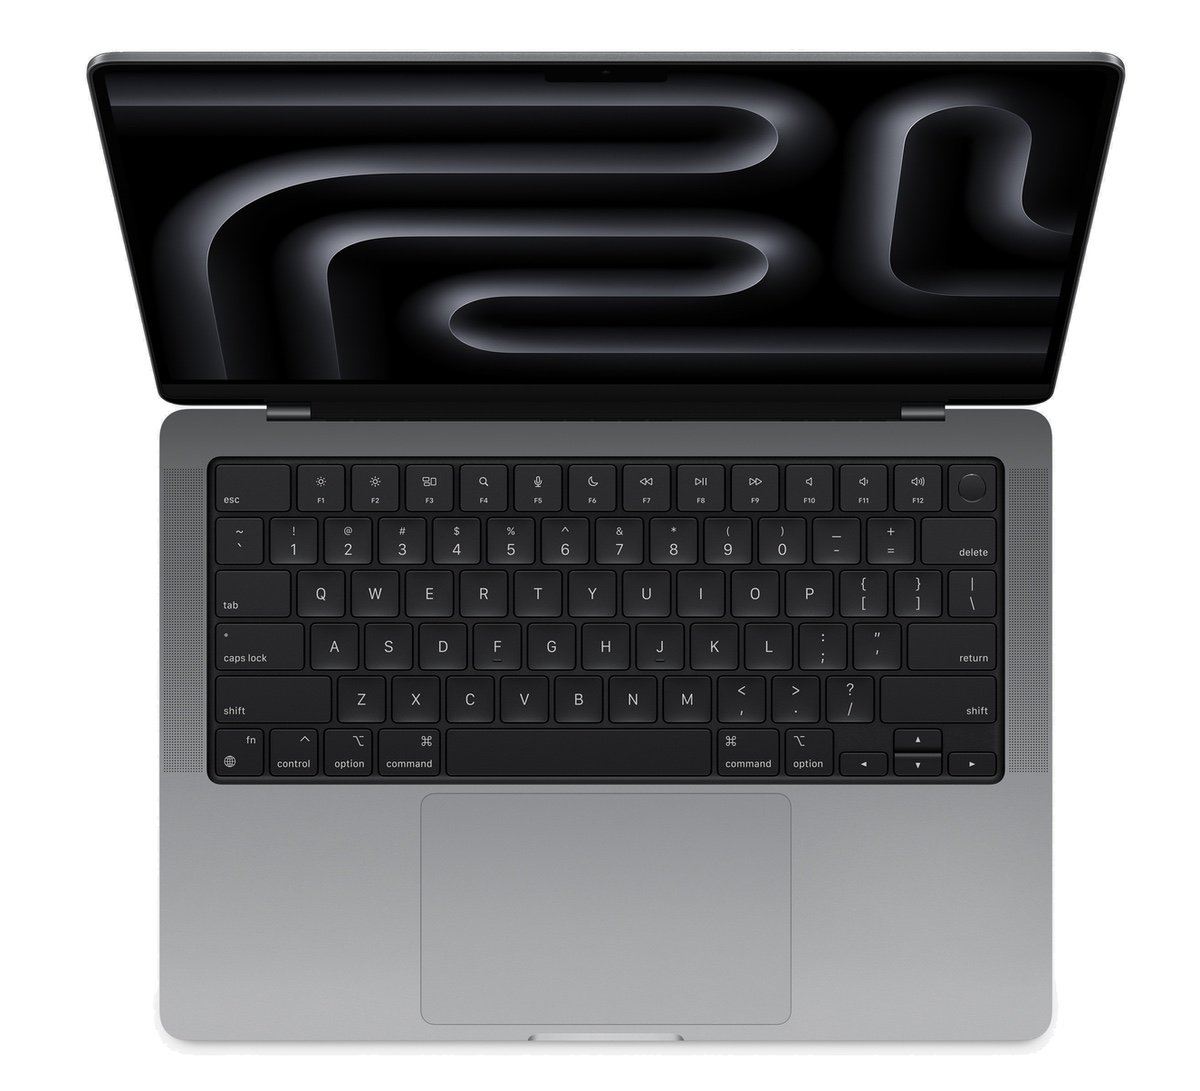 SALE APPLE Computer MacBook Pro Laptop Pc Mac Macintosh Internet